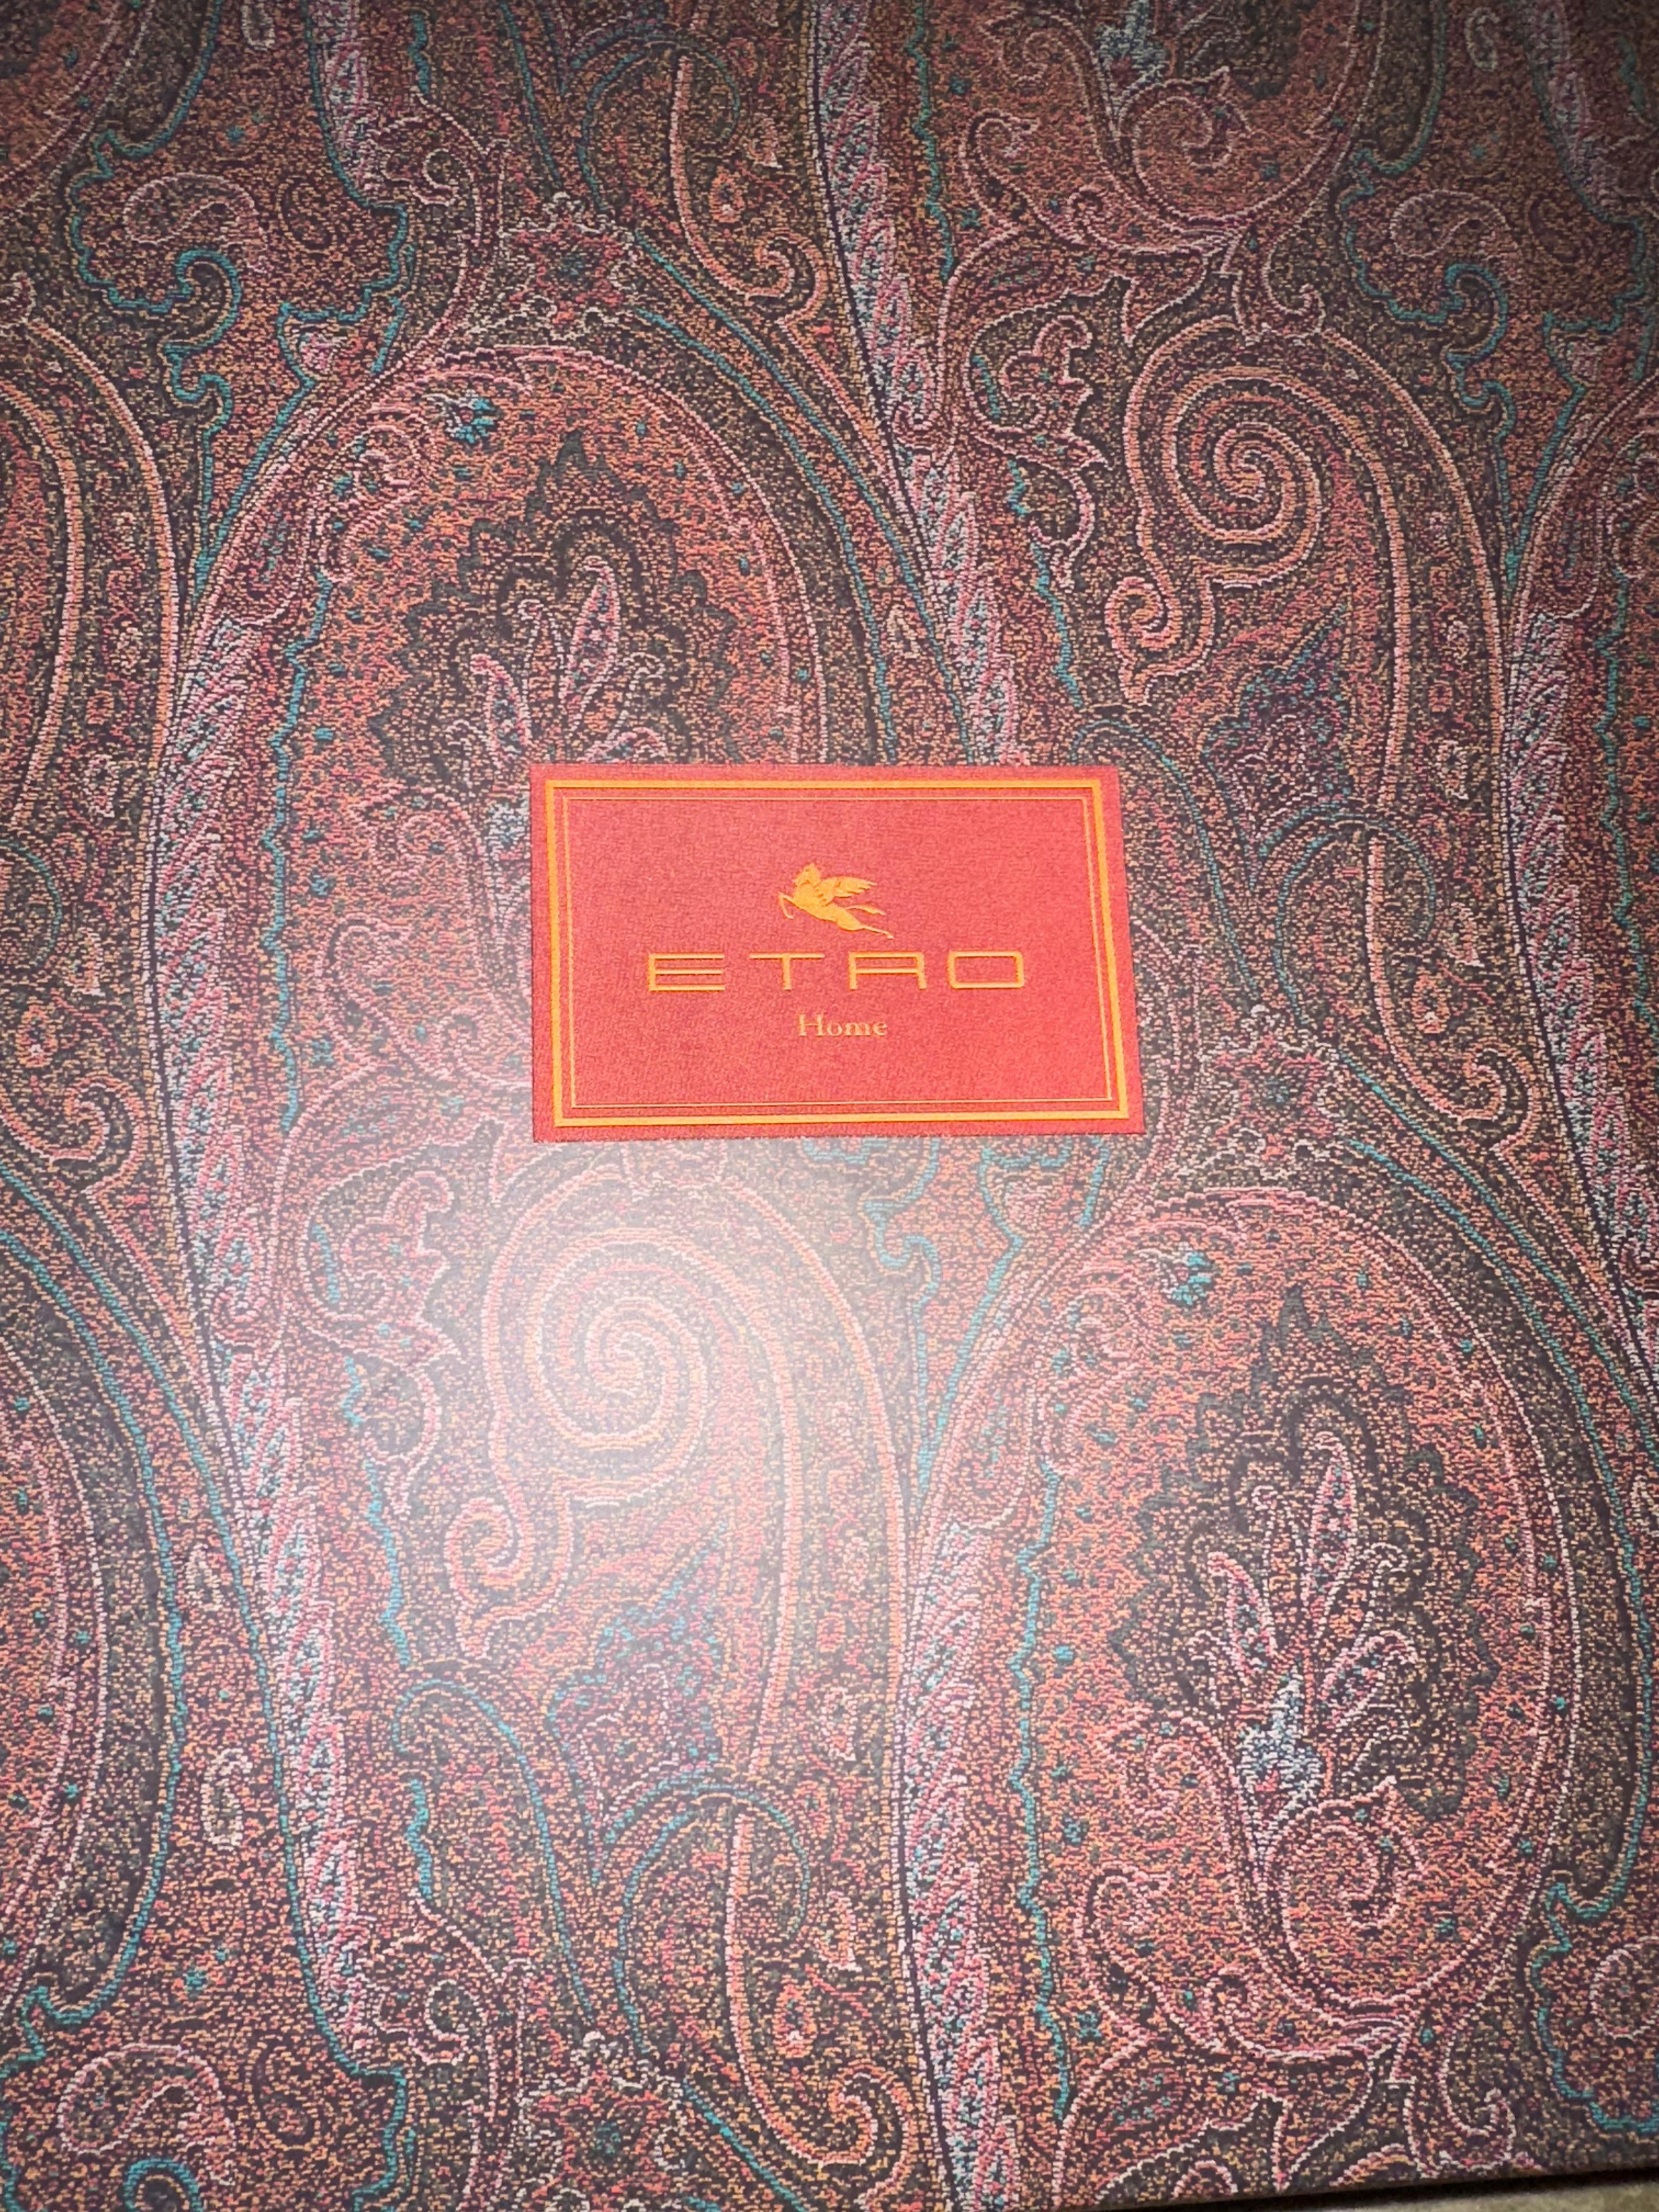 XXIe siècle et contemporain Etro Bani Silk Throw, Deep Red, New in Box, Italy  en vente